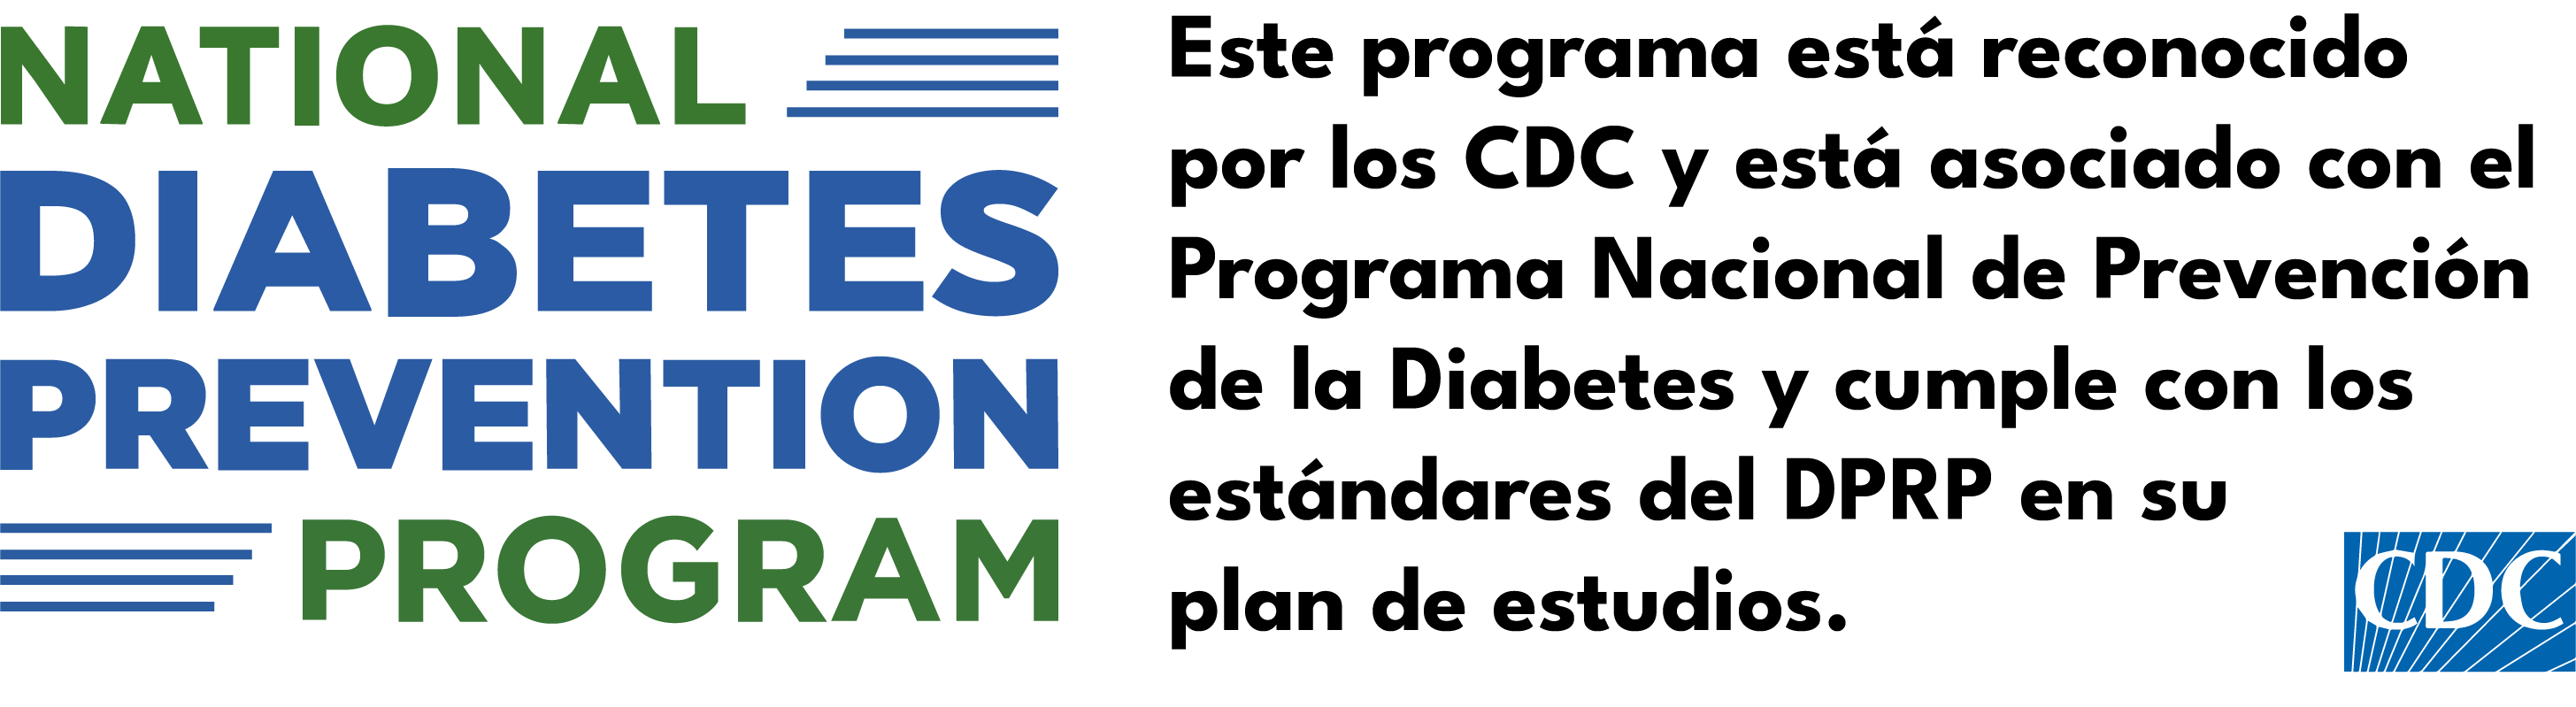 National Diabetes Prevention Program Tag spanish.png